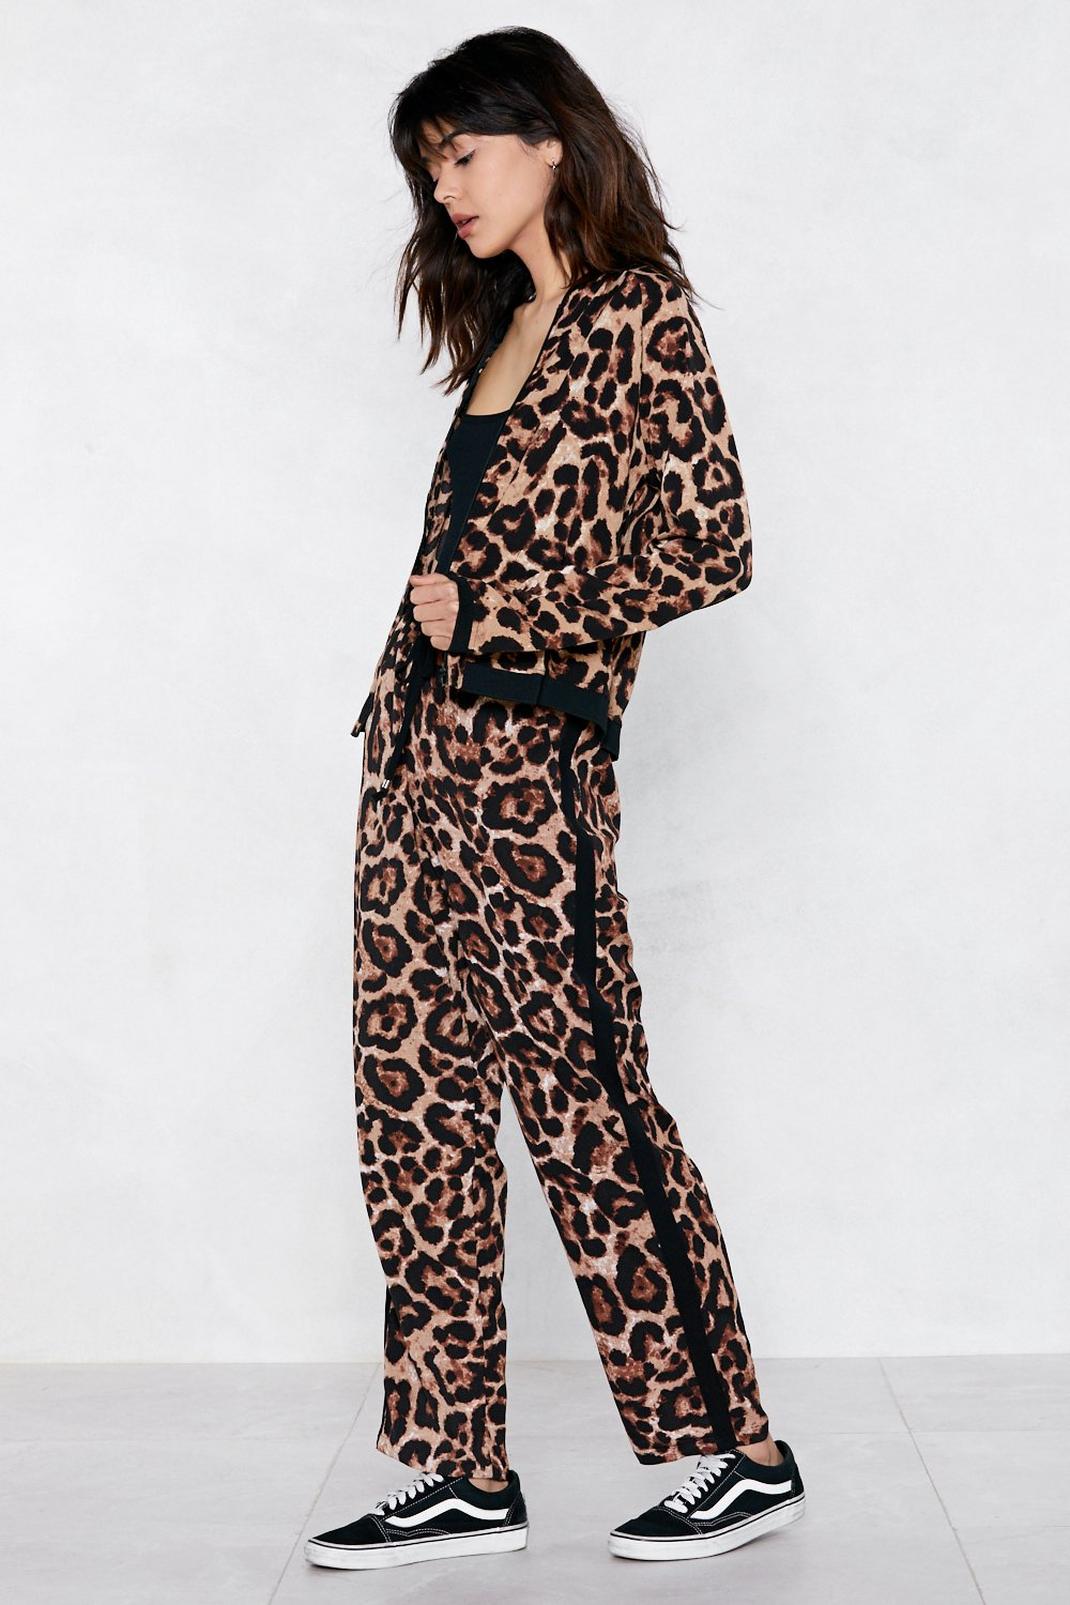 Moving On Up Leopard Pants image number 1